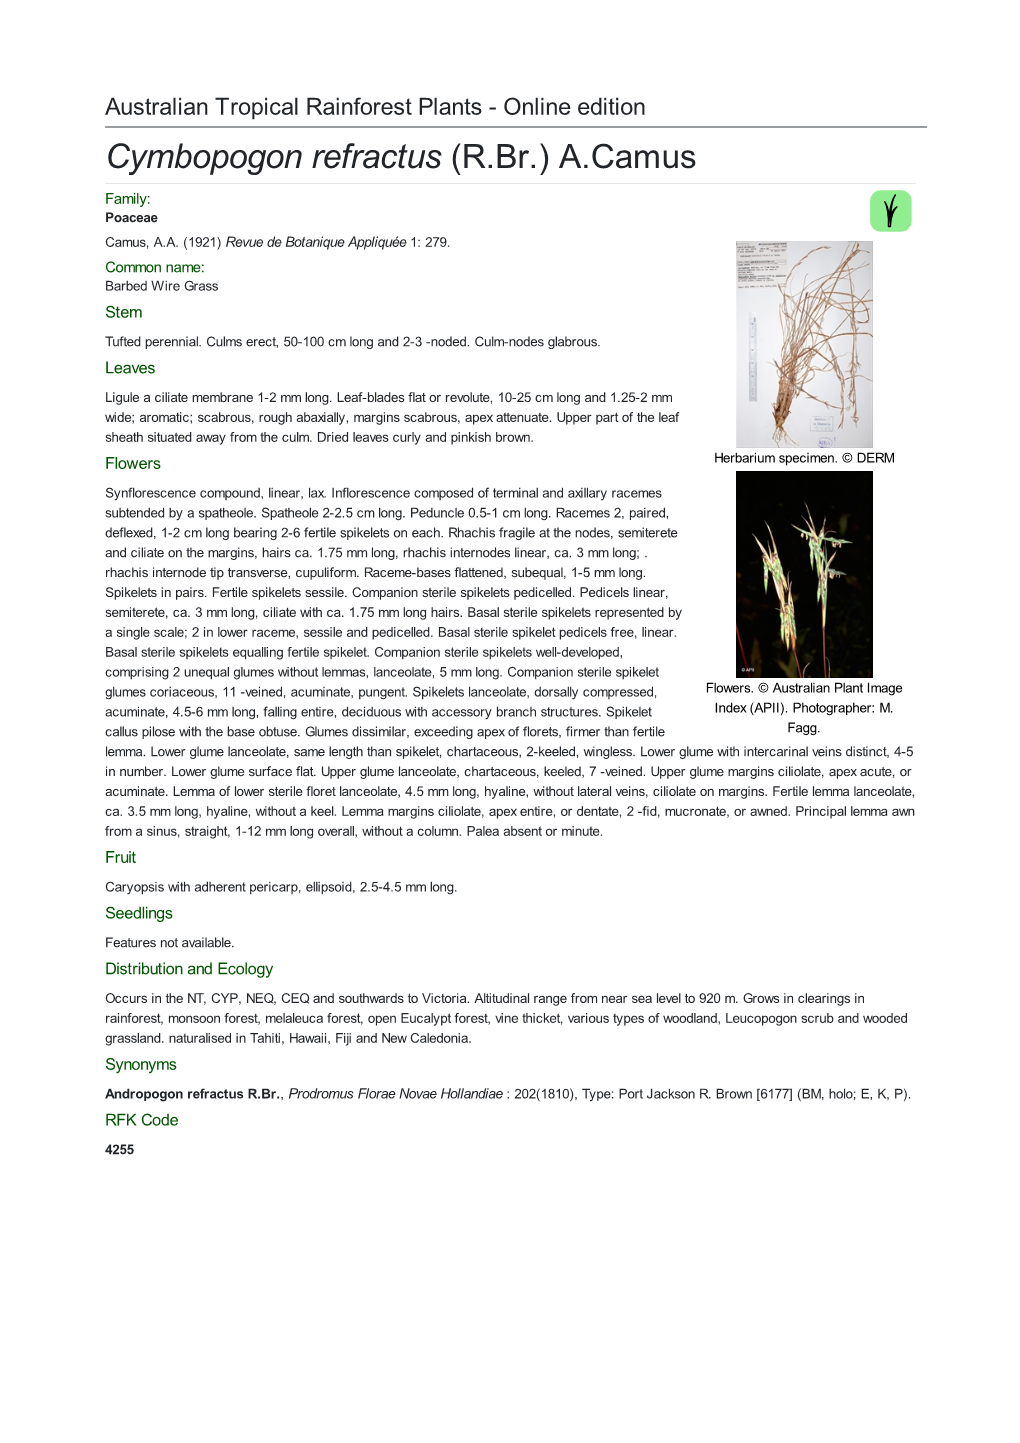 Cymbopogon Refractus (R.Br.) A.Camus Family: Poaceae Camus, A.A